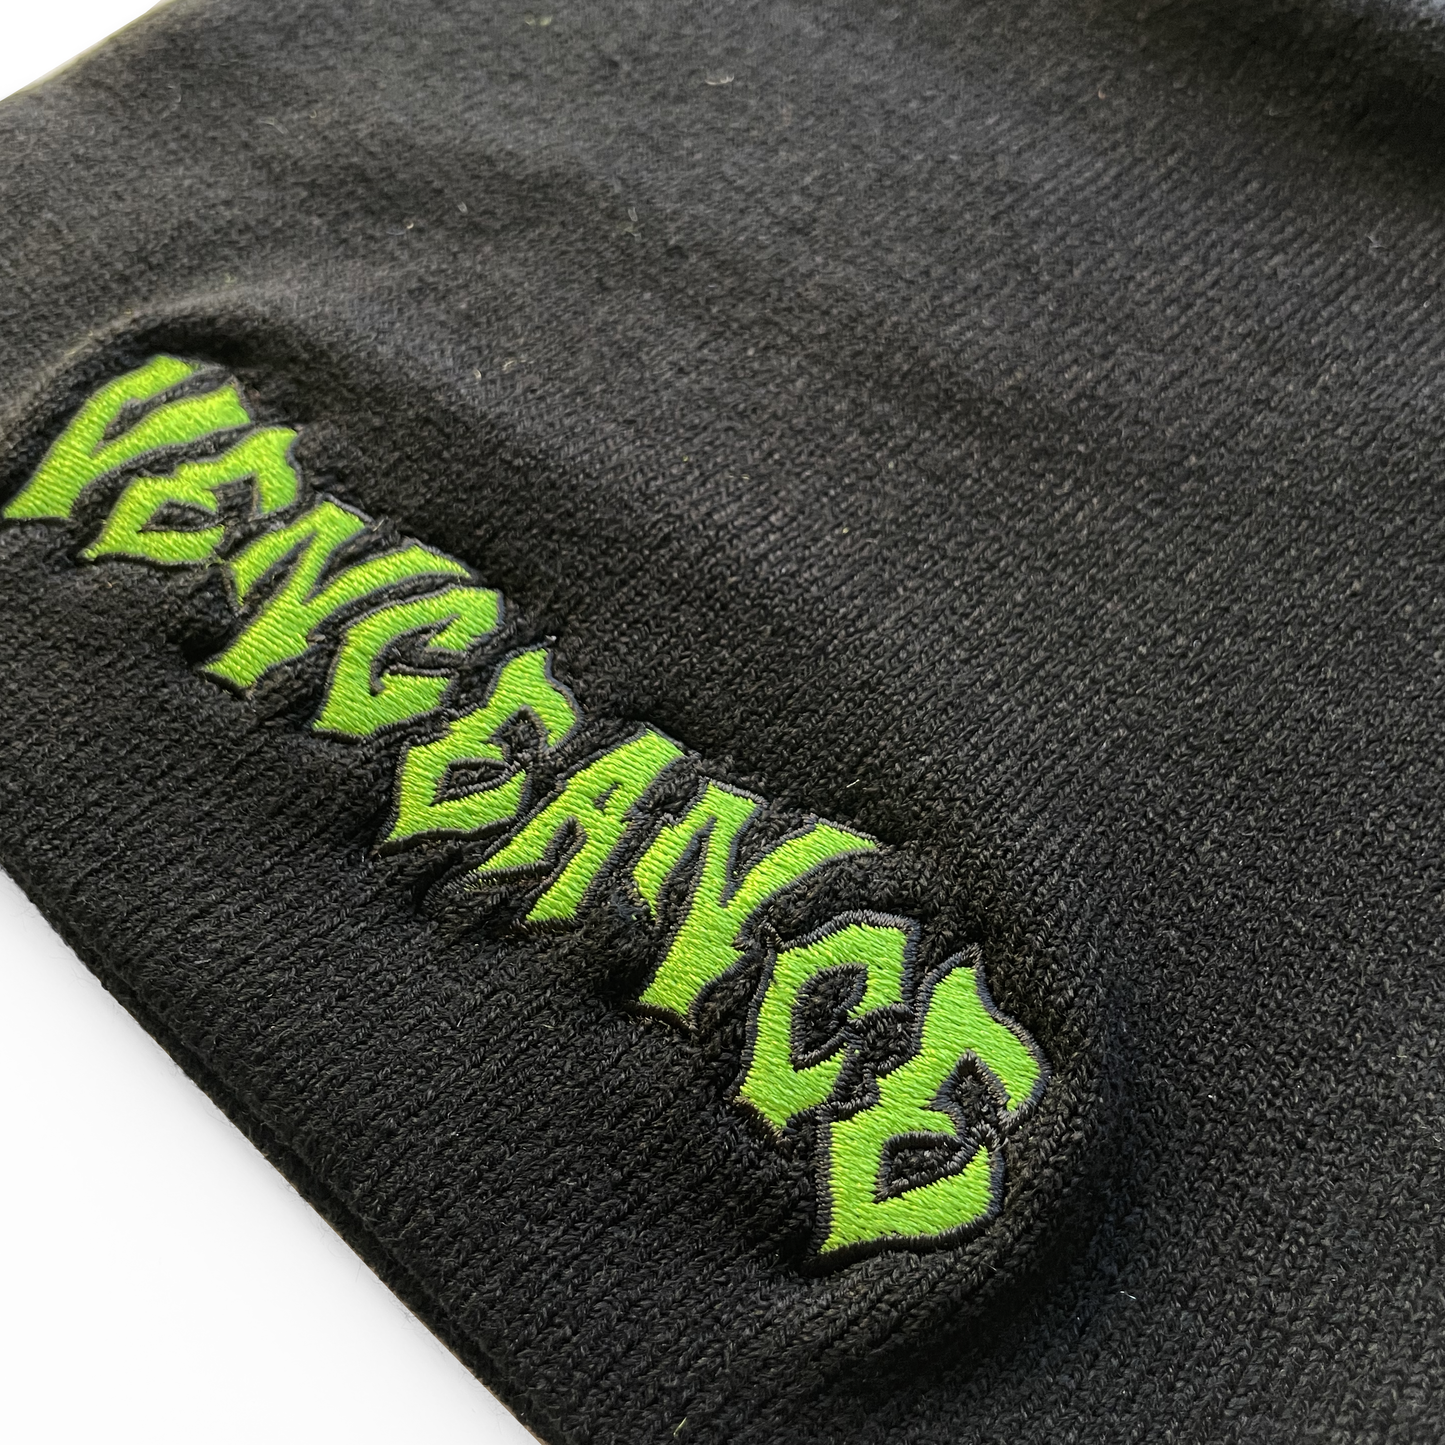 Black Vengeance Beanie - Green Embroidery